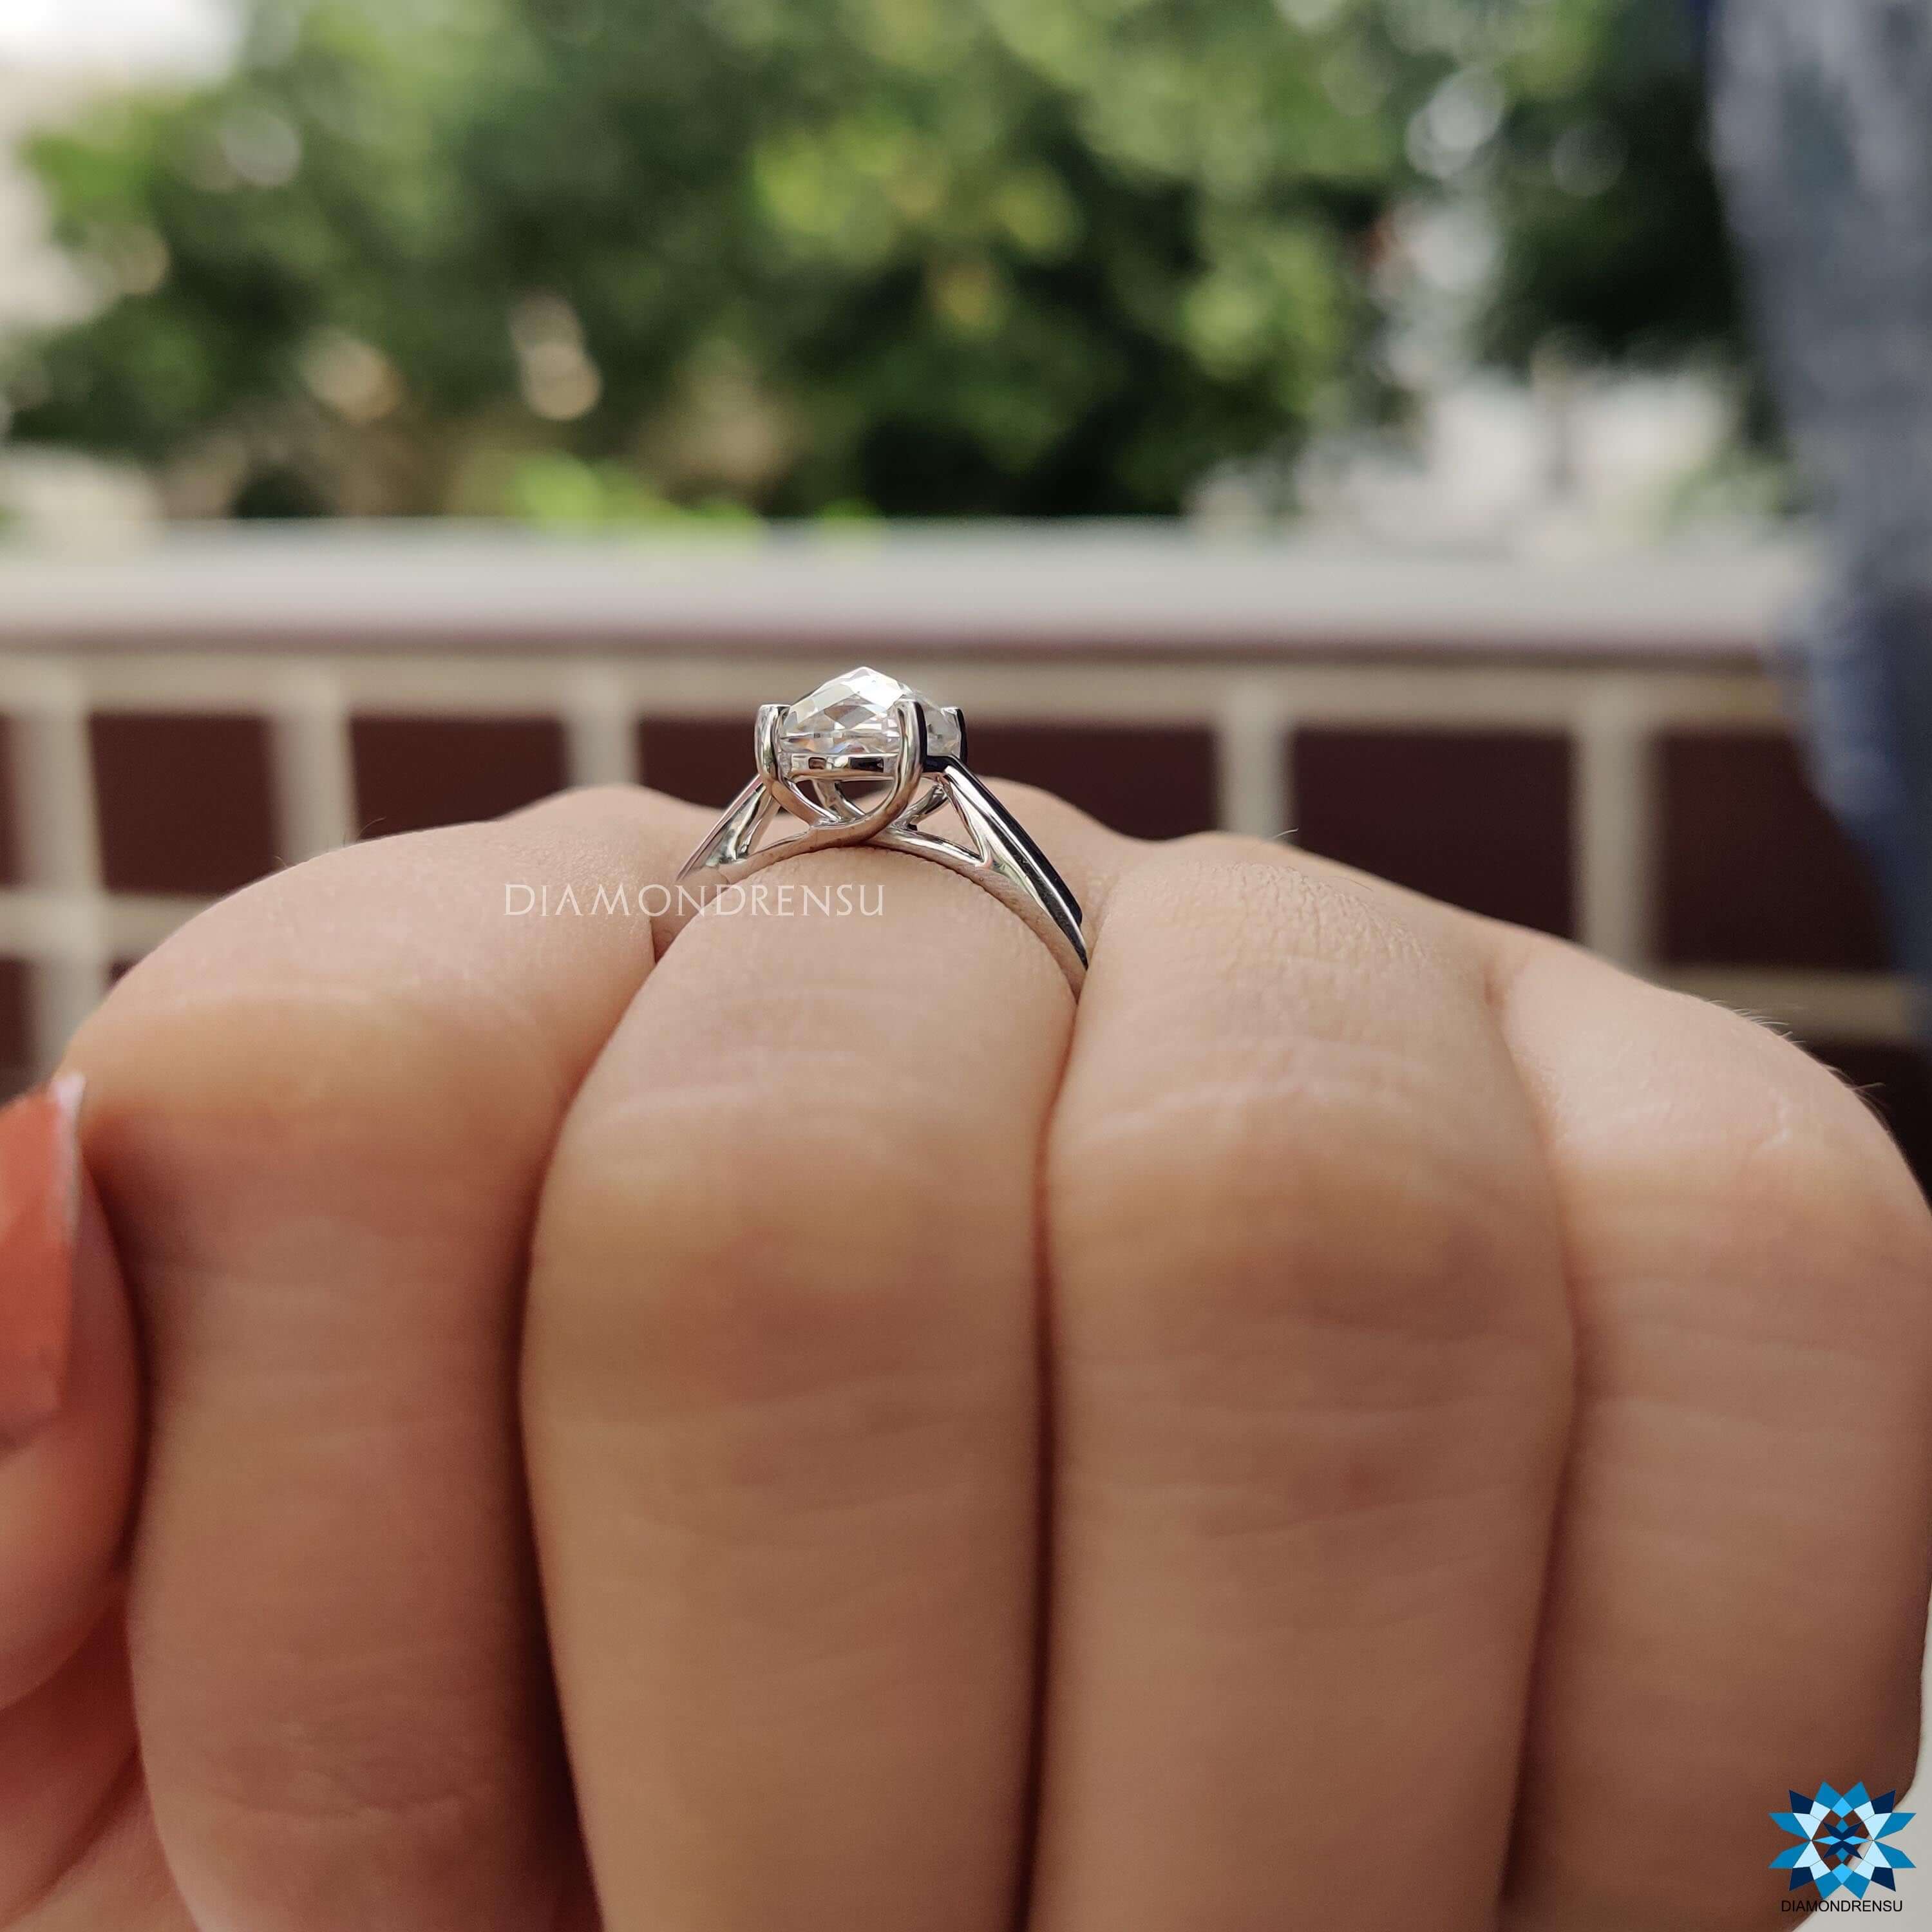 white gold engagement ring - diamondrensu